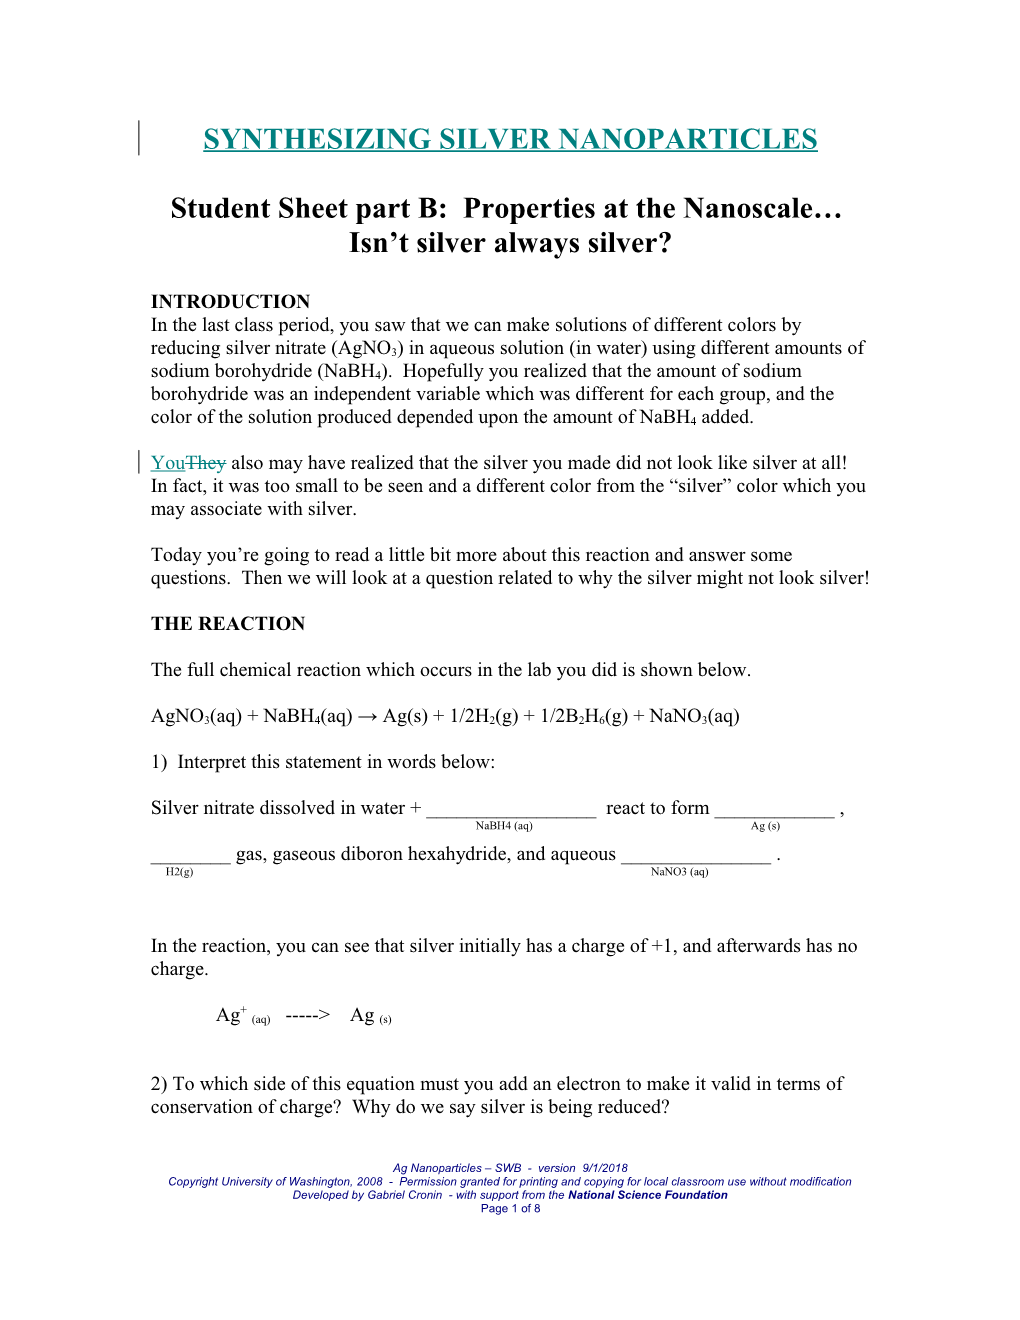 Student Sheet Part B: Properties at the Nanoscale